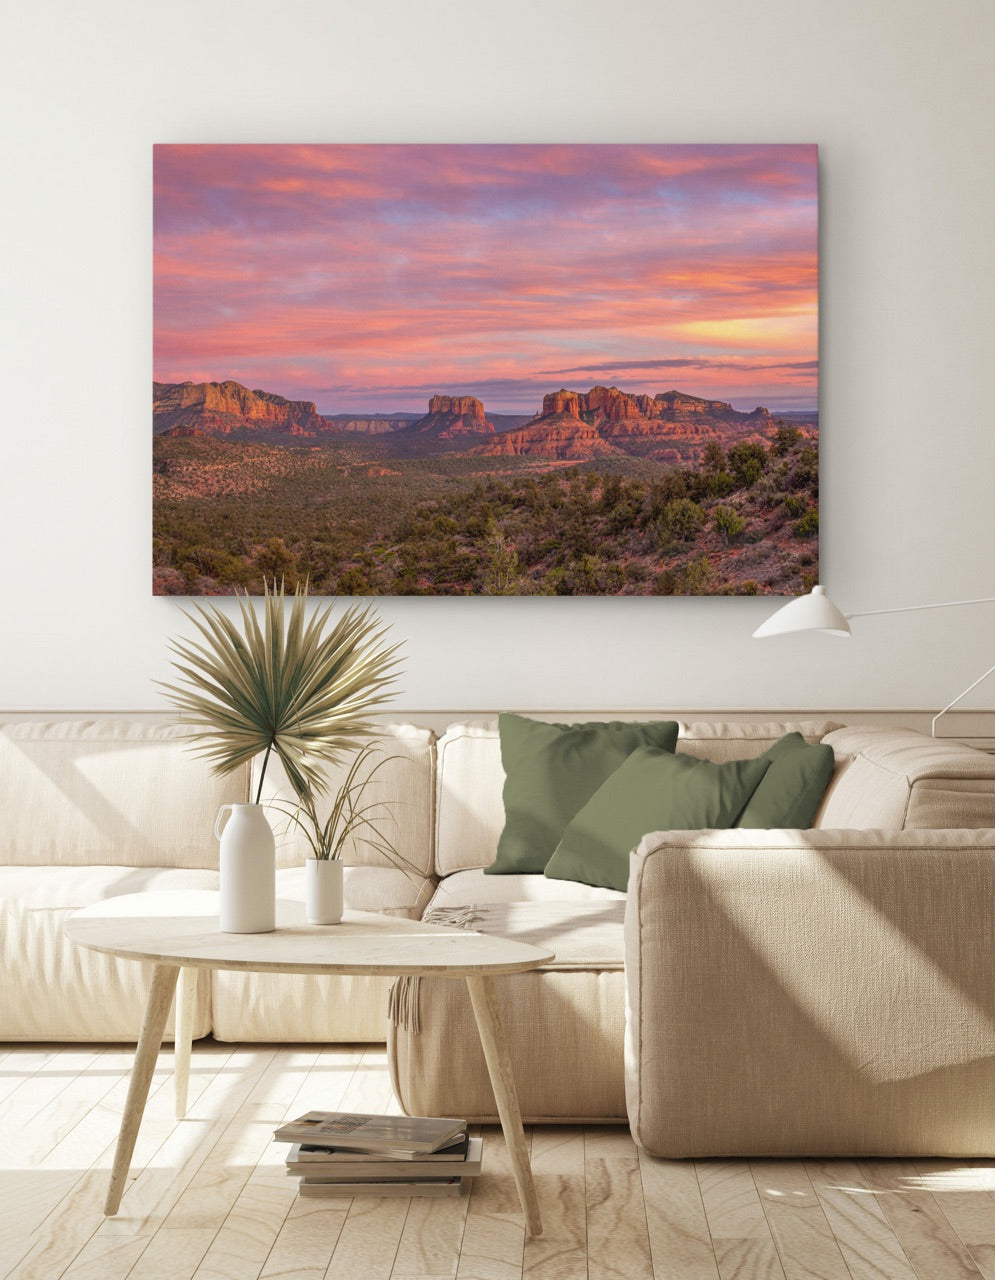 Modern living room with vibrant sunset photograph art